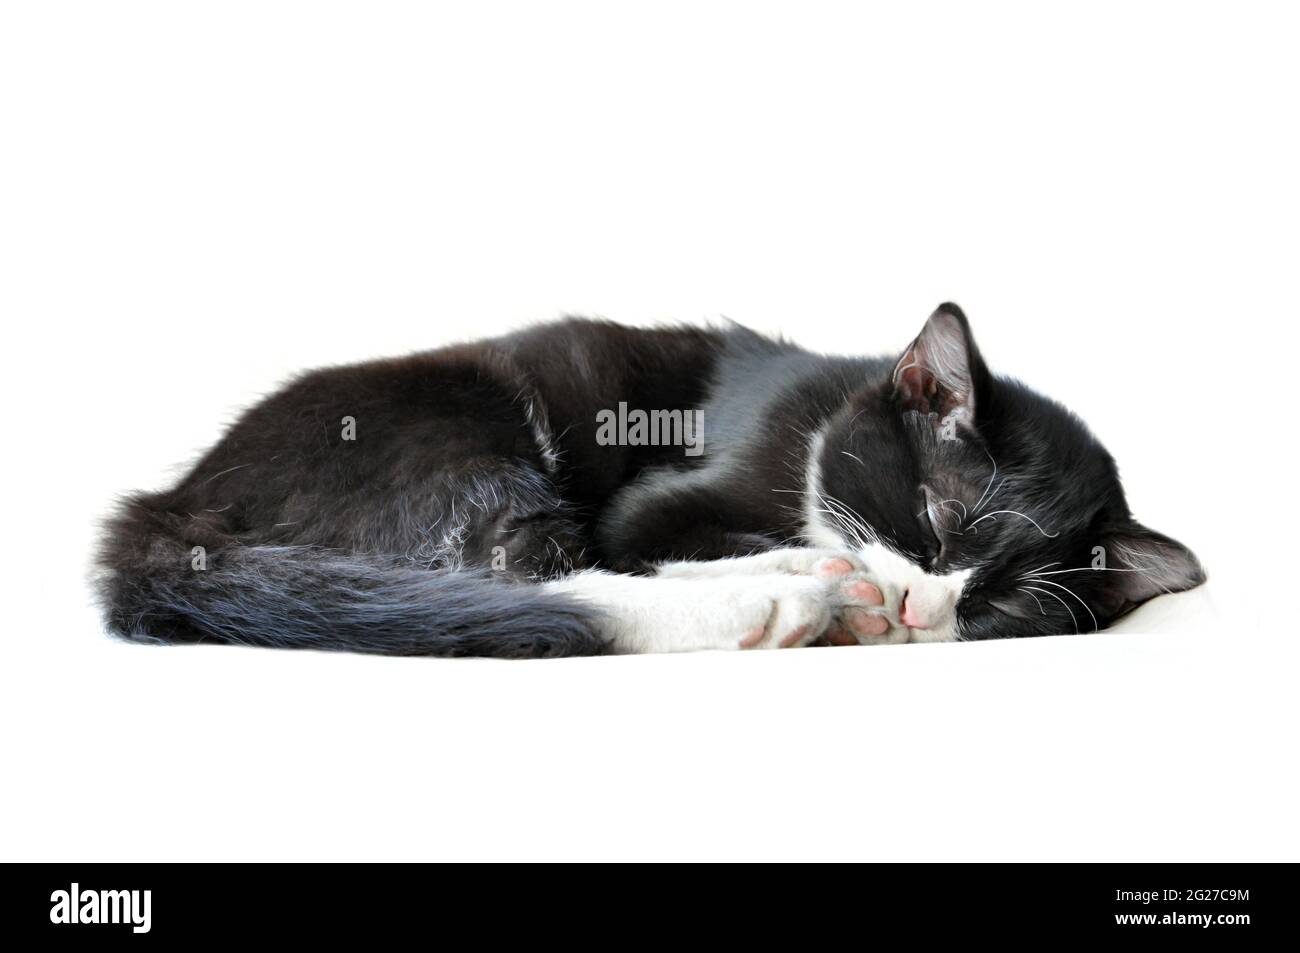 Adorable sleeping black cat Stock Photo